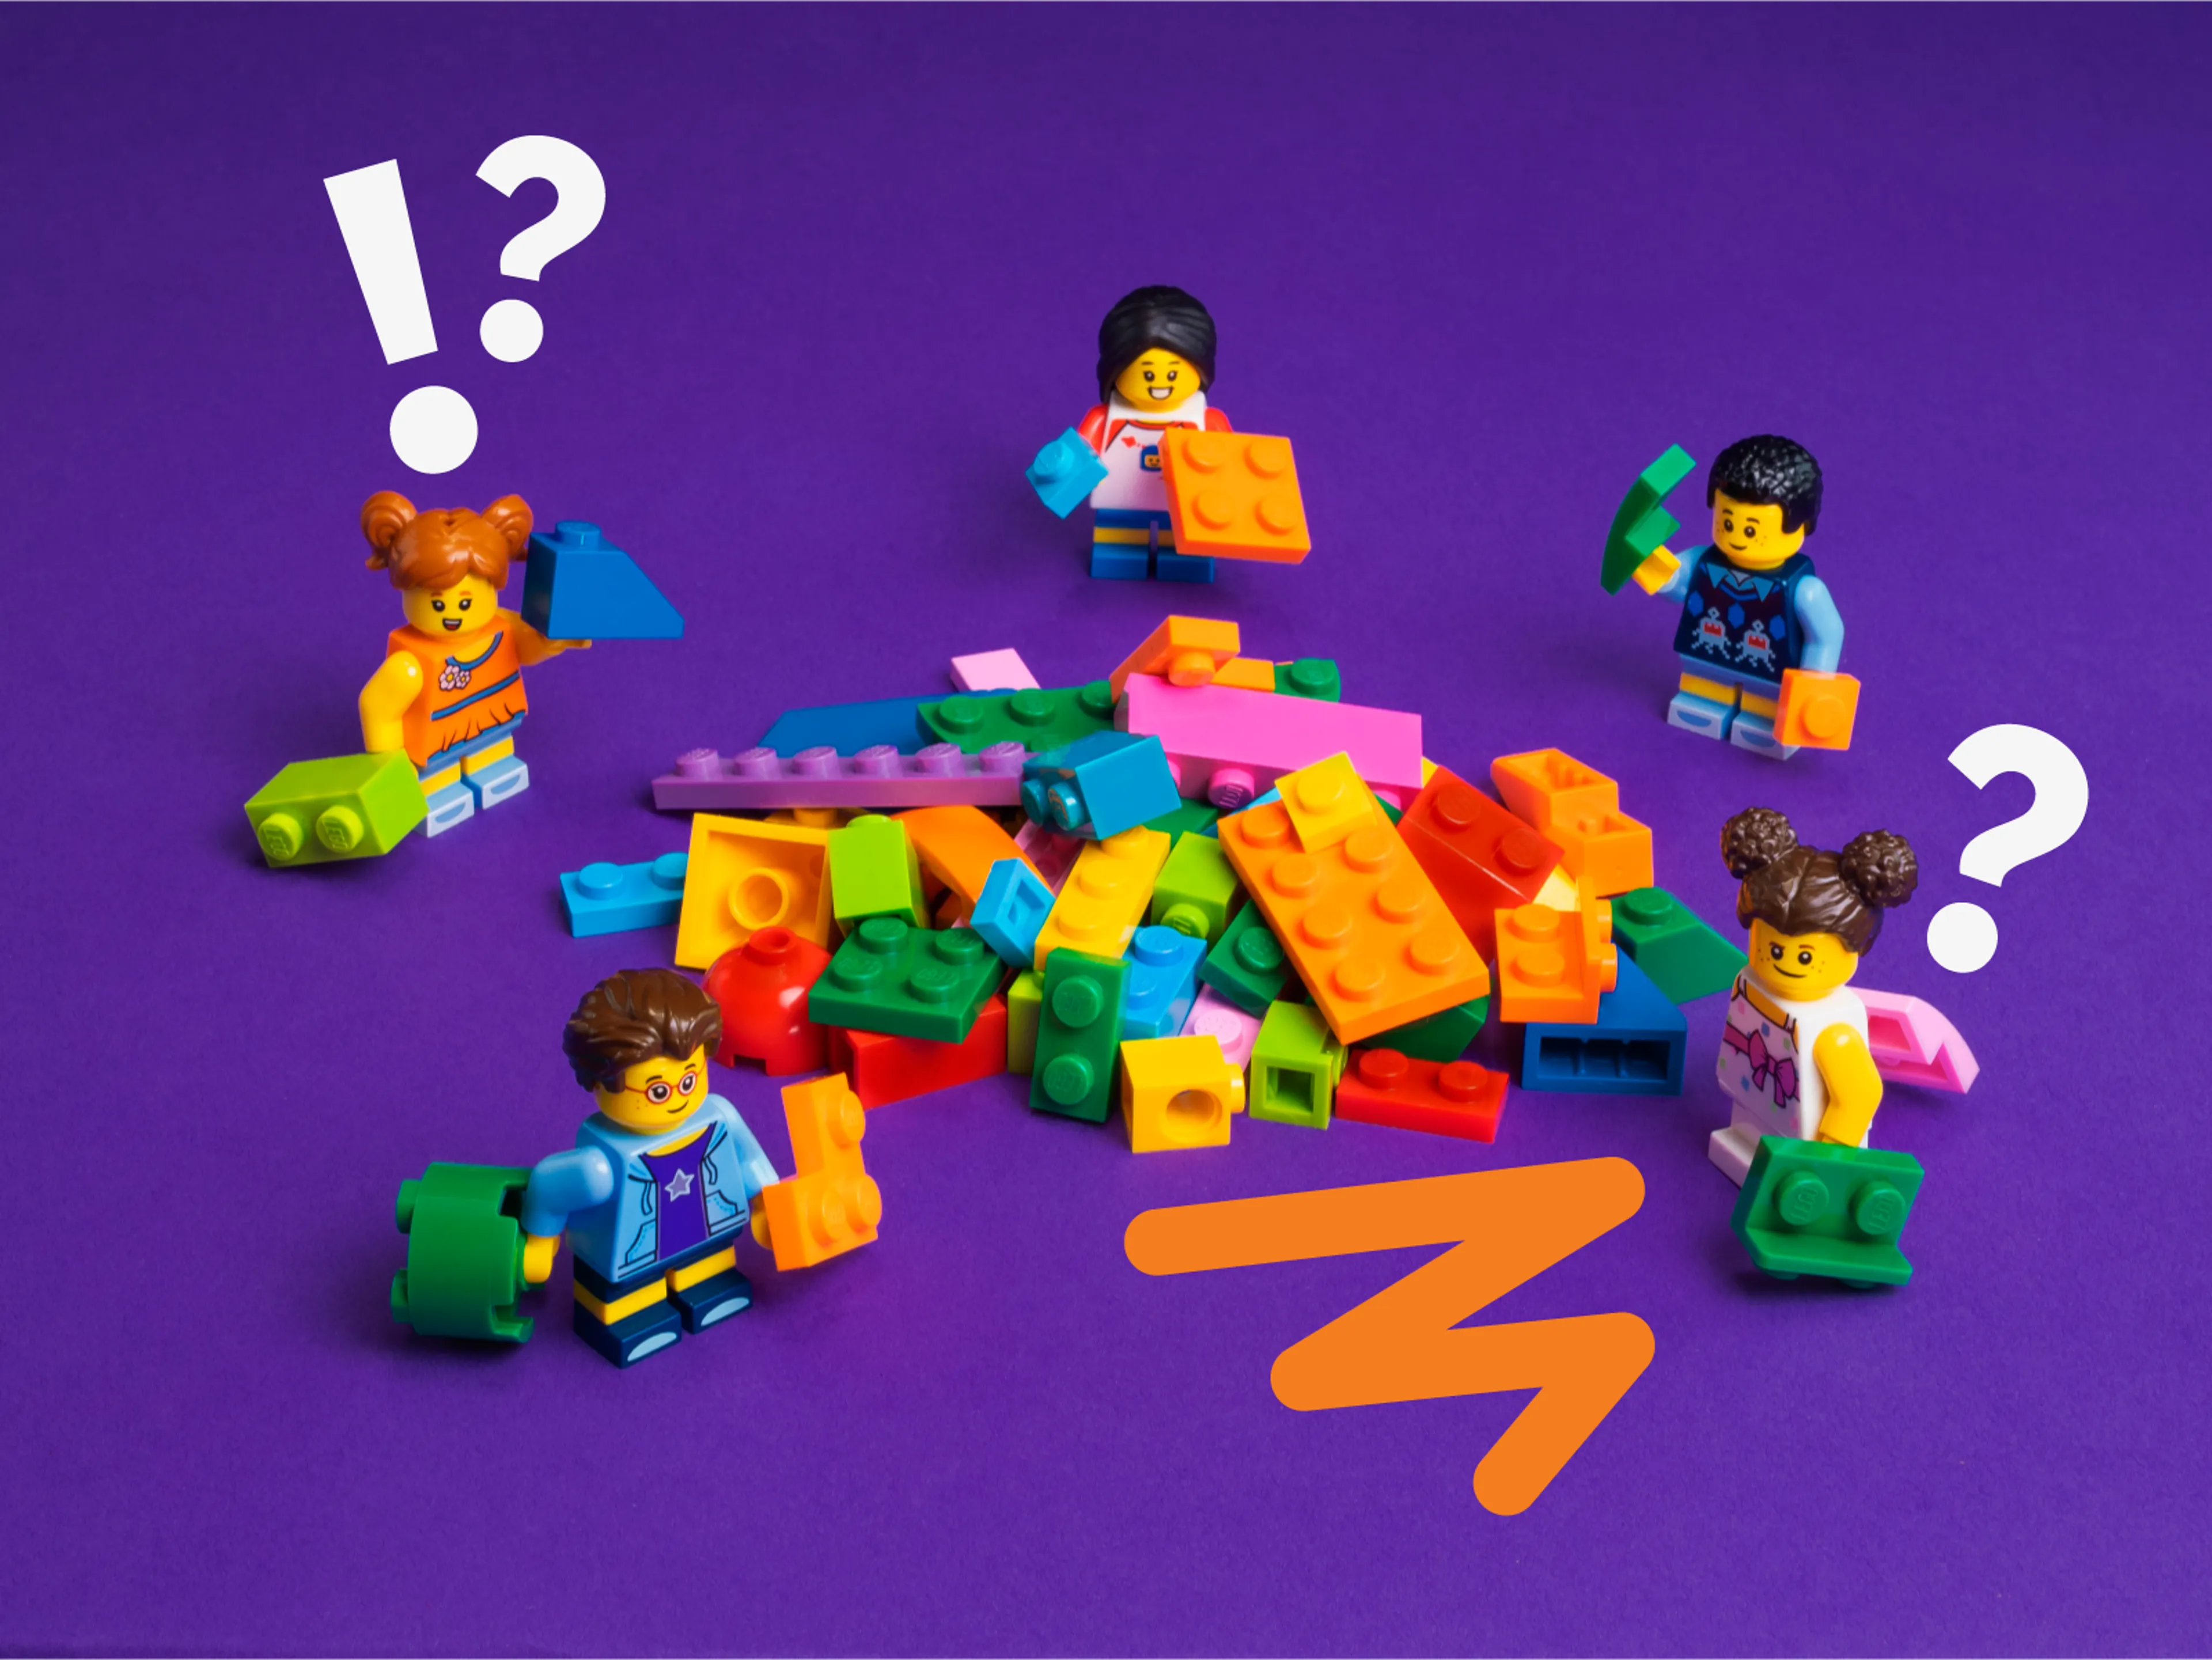 LEGO minifigures play with LEGO bricks